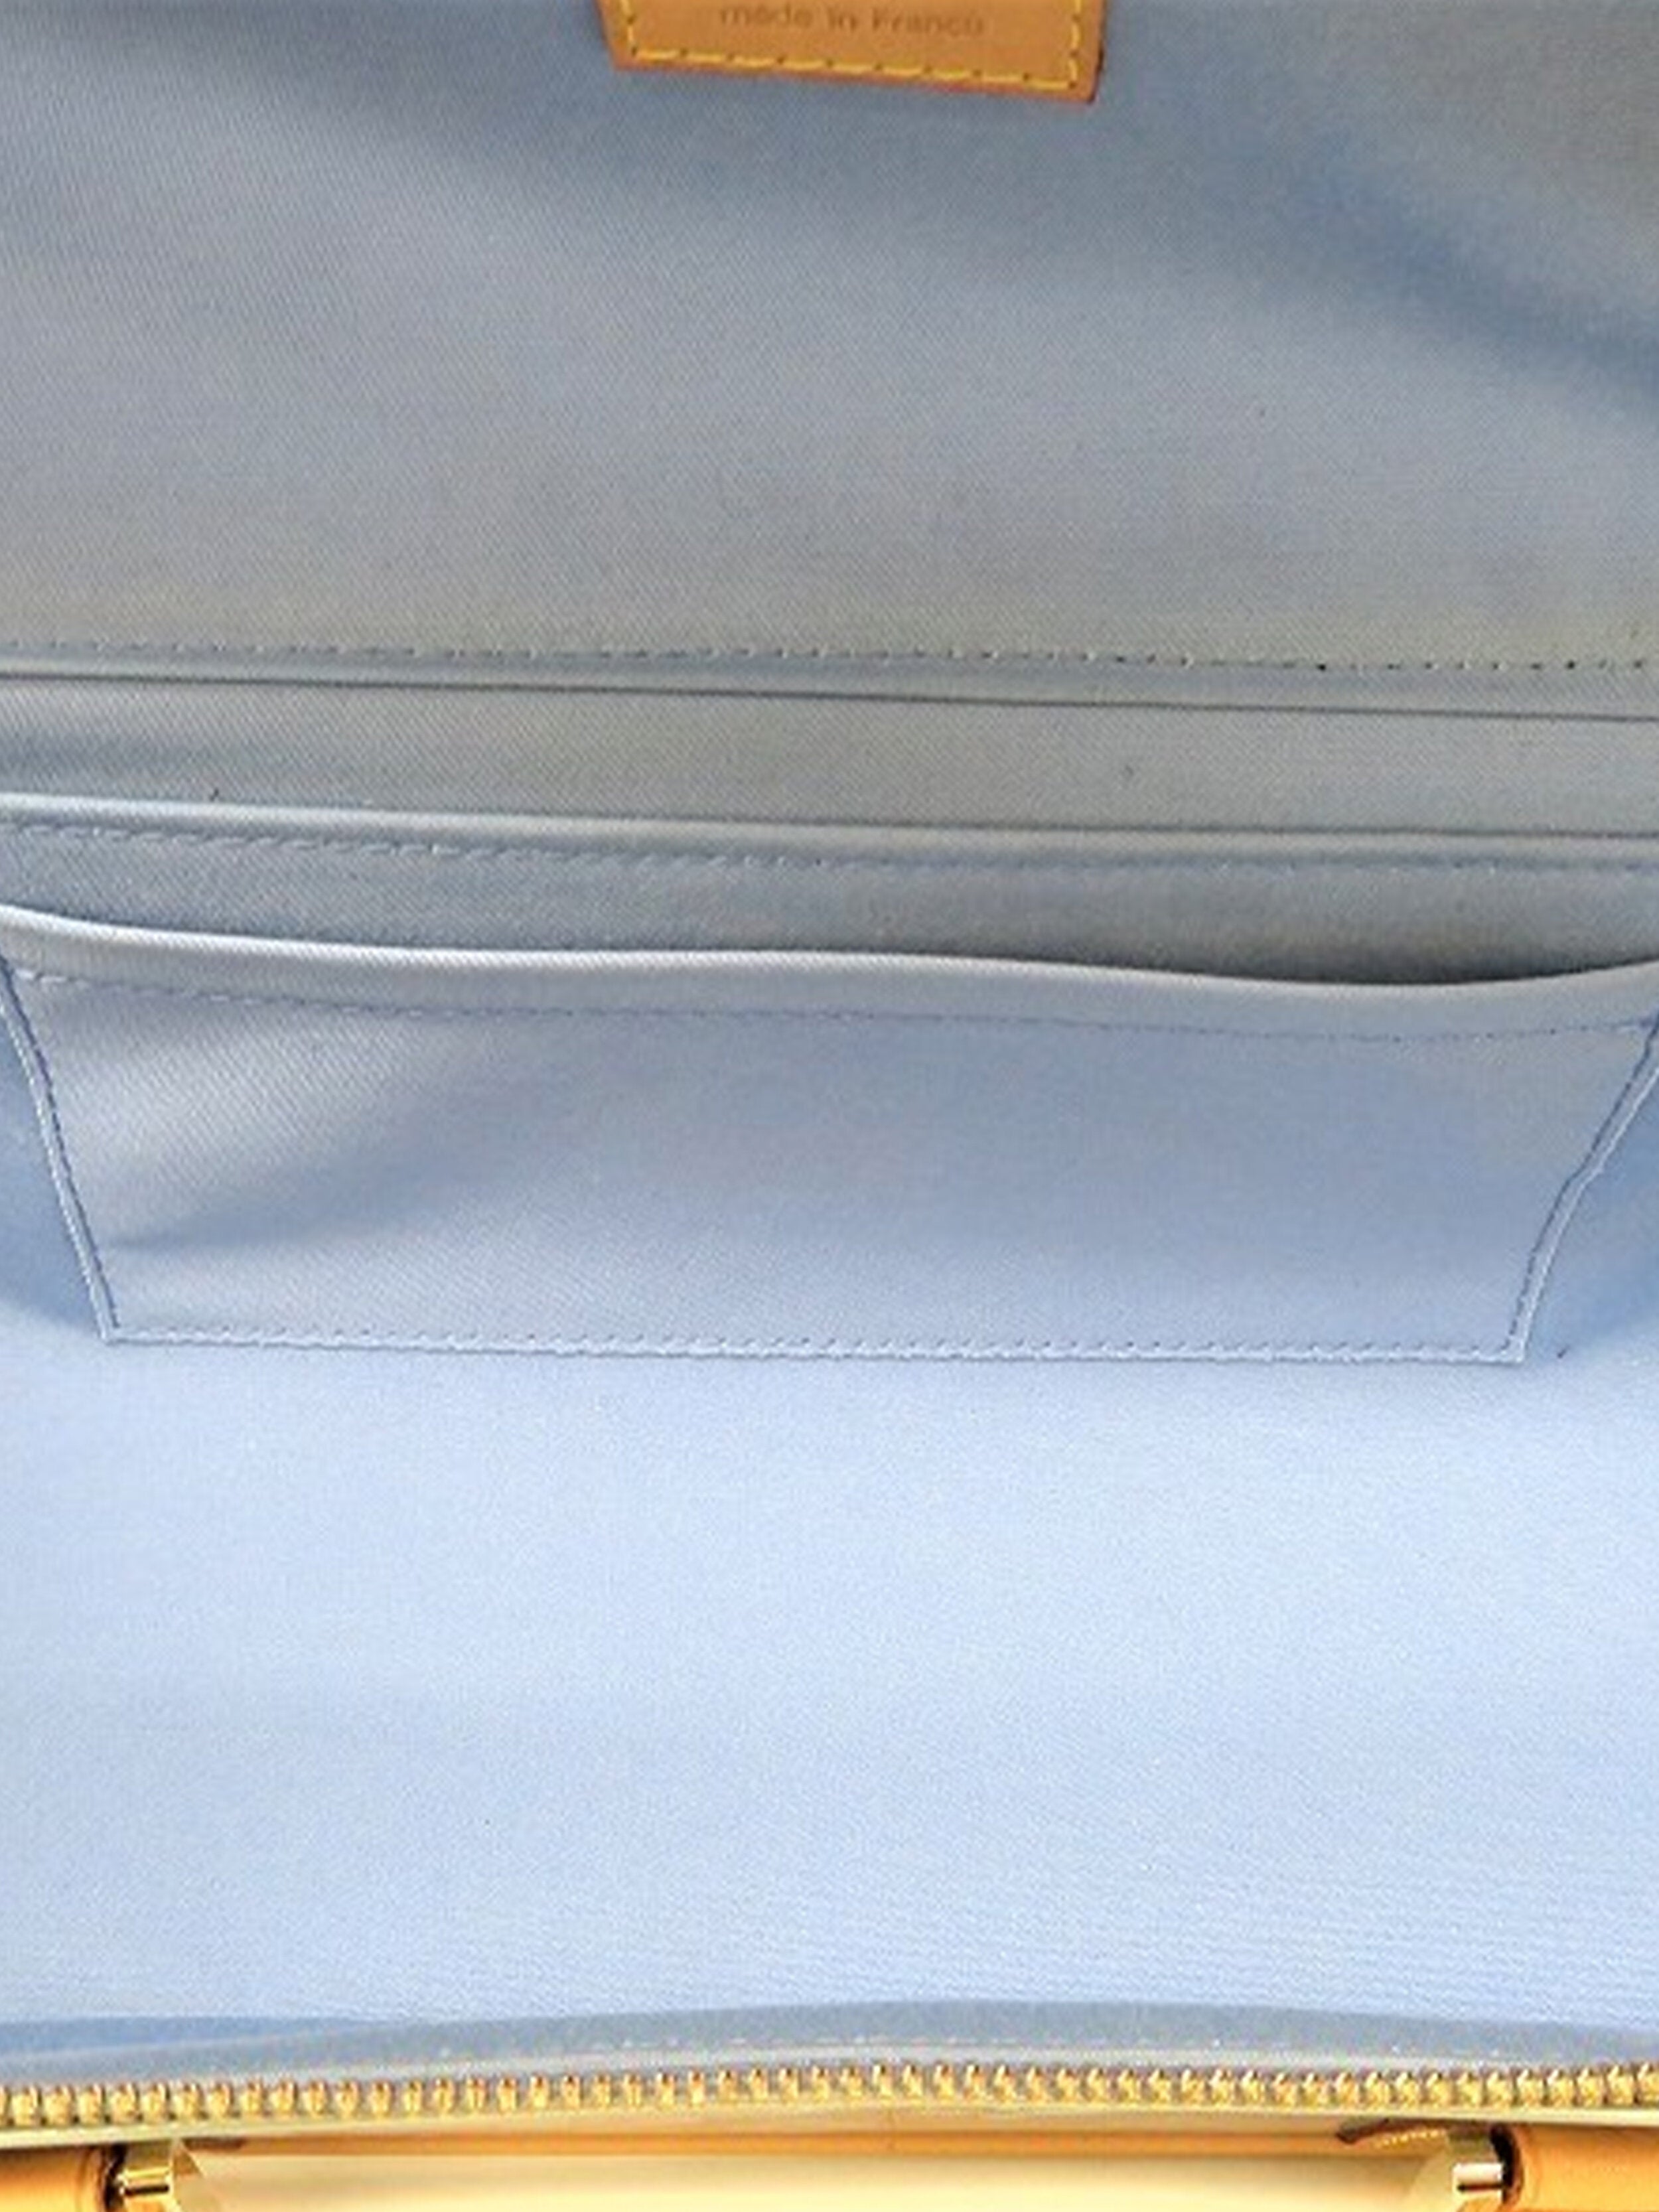 Louis Vuitton 2000s Brown Vernis Shoulder Bag · INTO